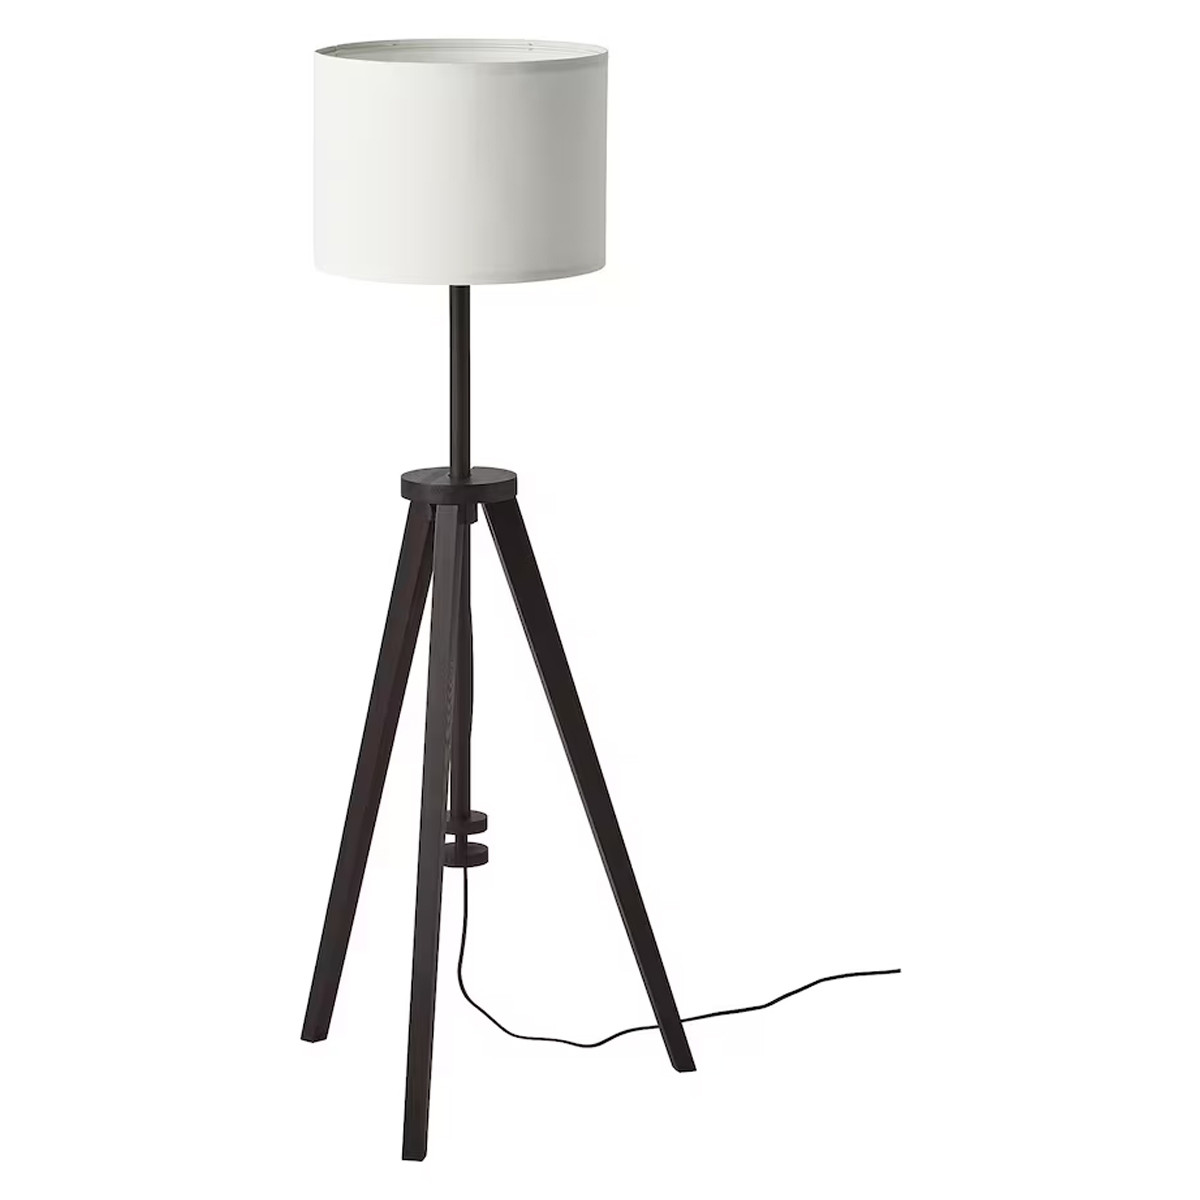 LAUTERS 119-151cm podna lampa, braon/bijela